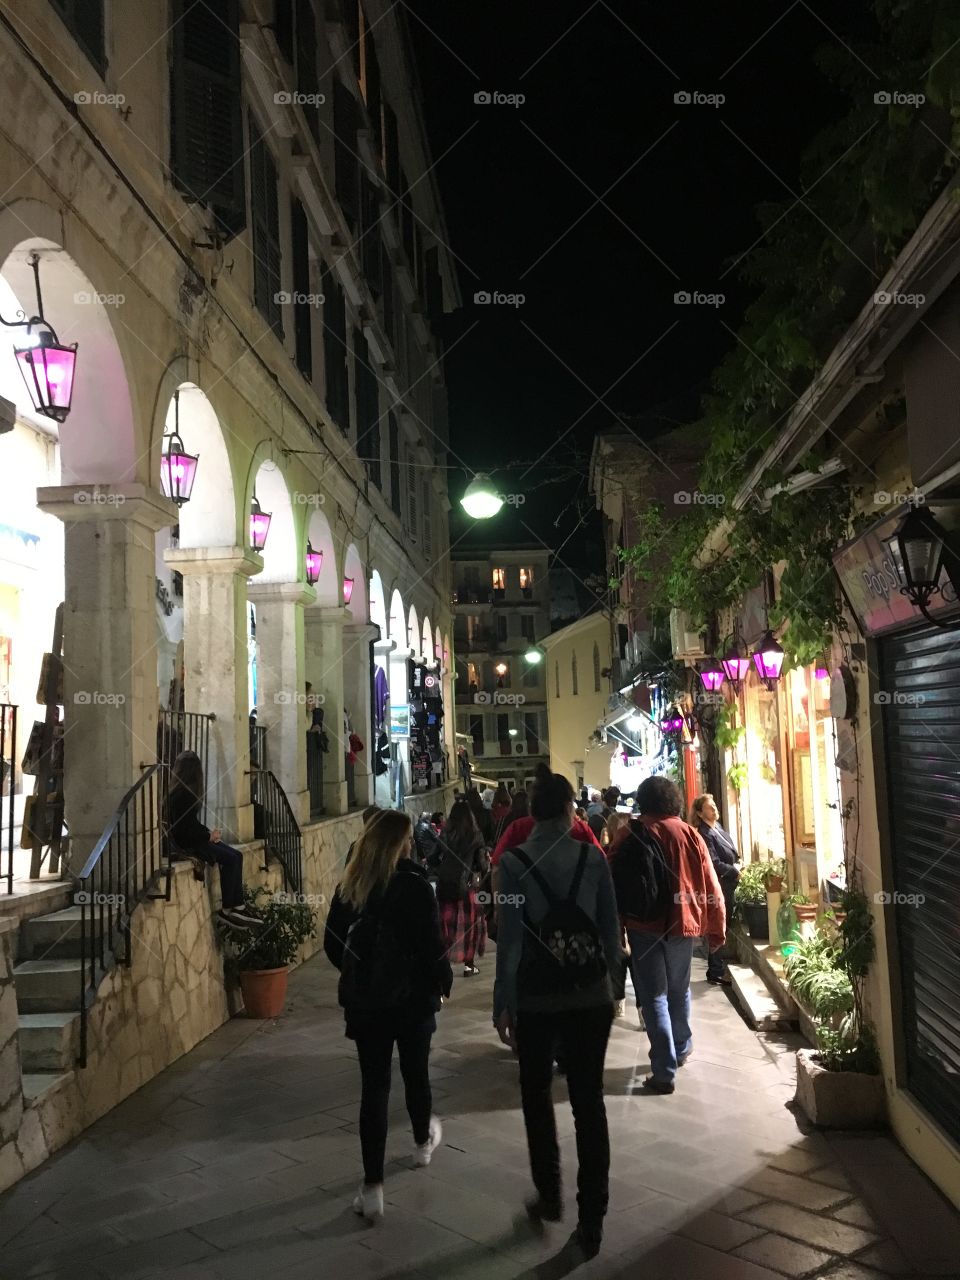 Good Friday purple lanterns, night street scene in Corfu Town